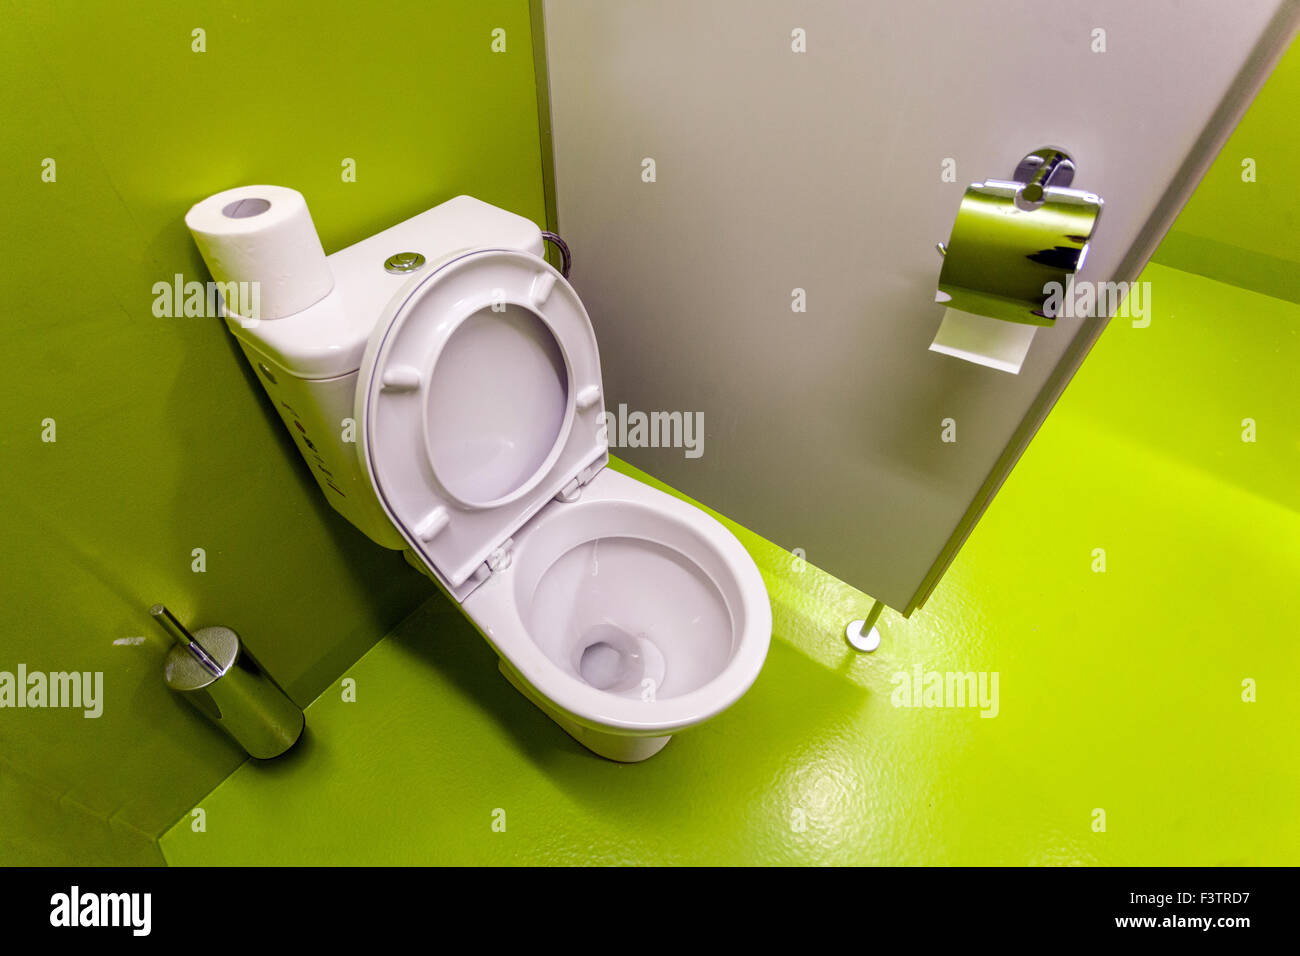 Toilet seat in green Stock Photo